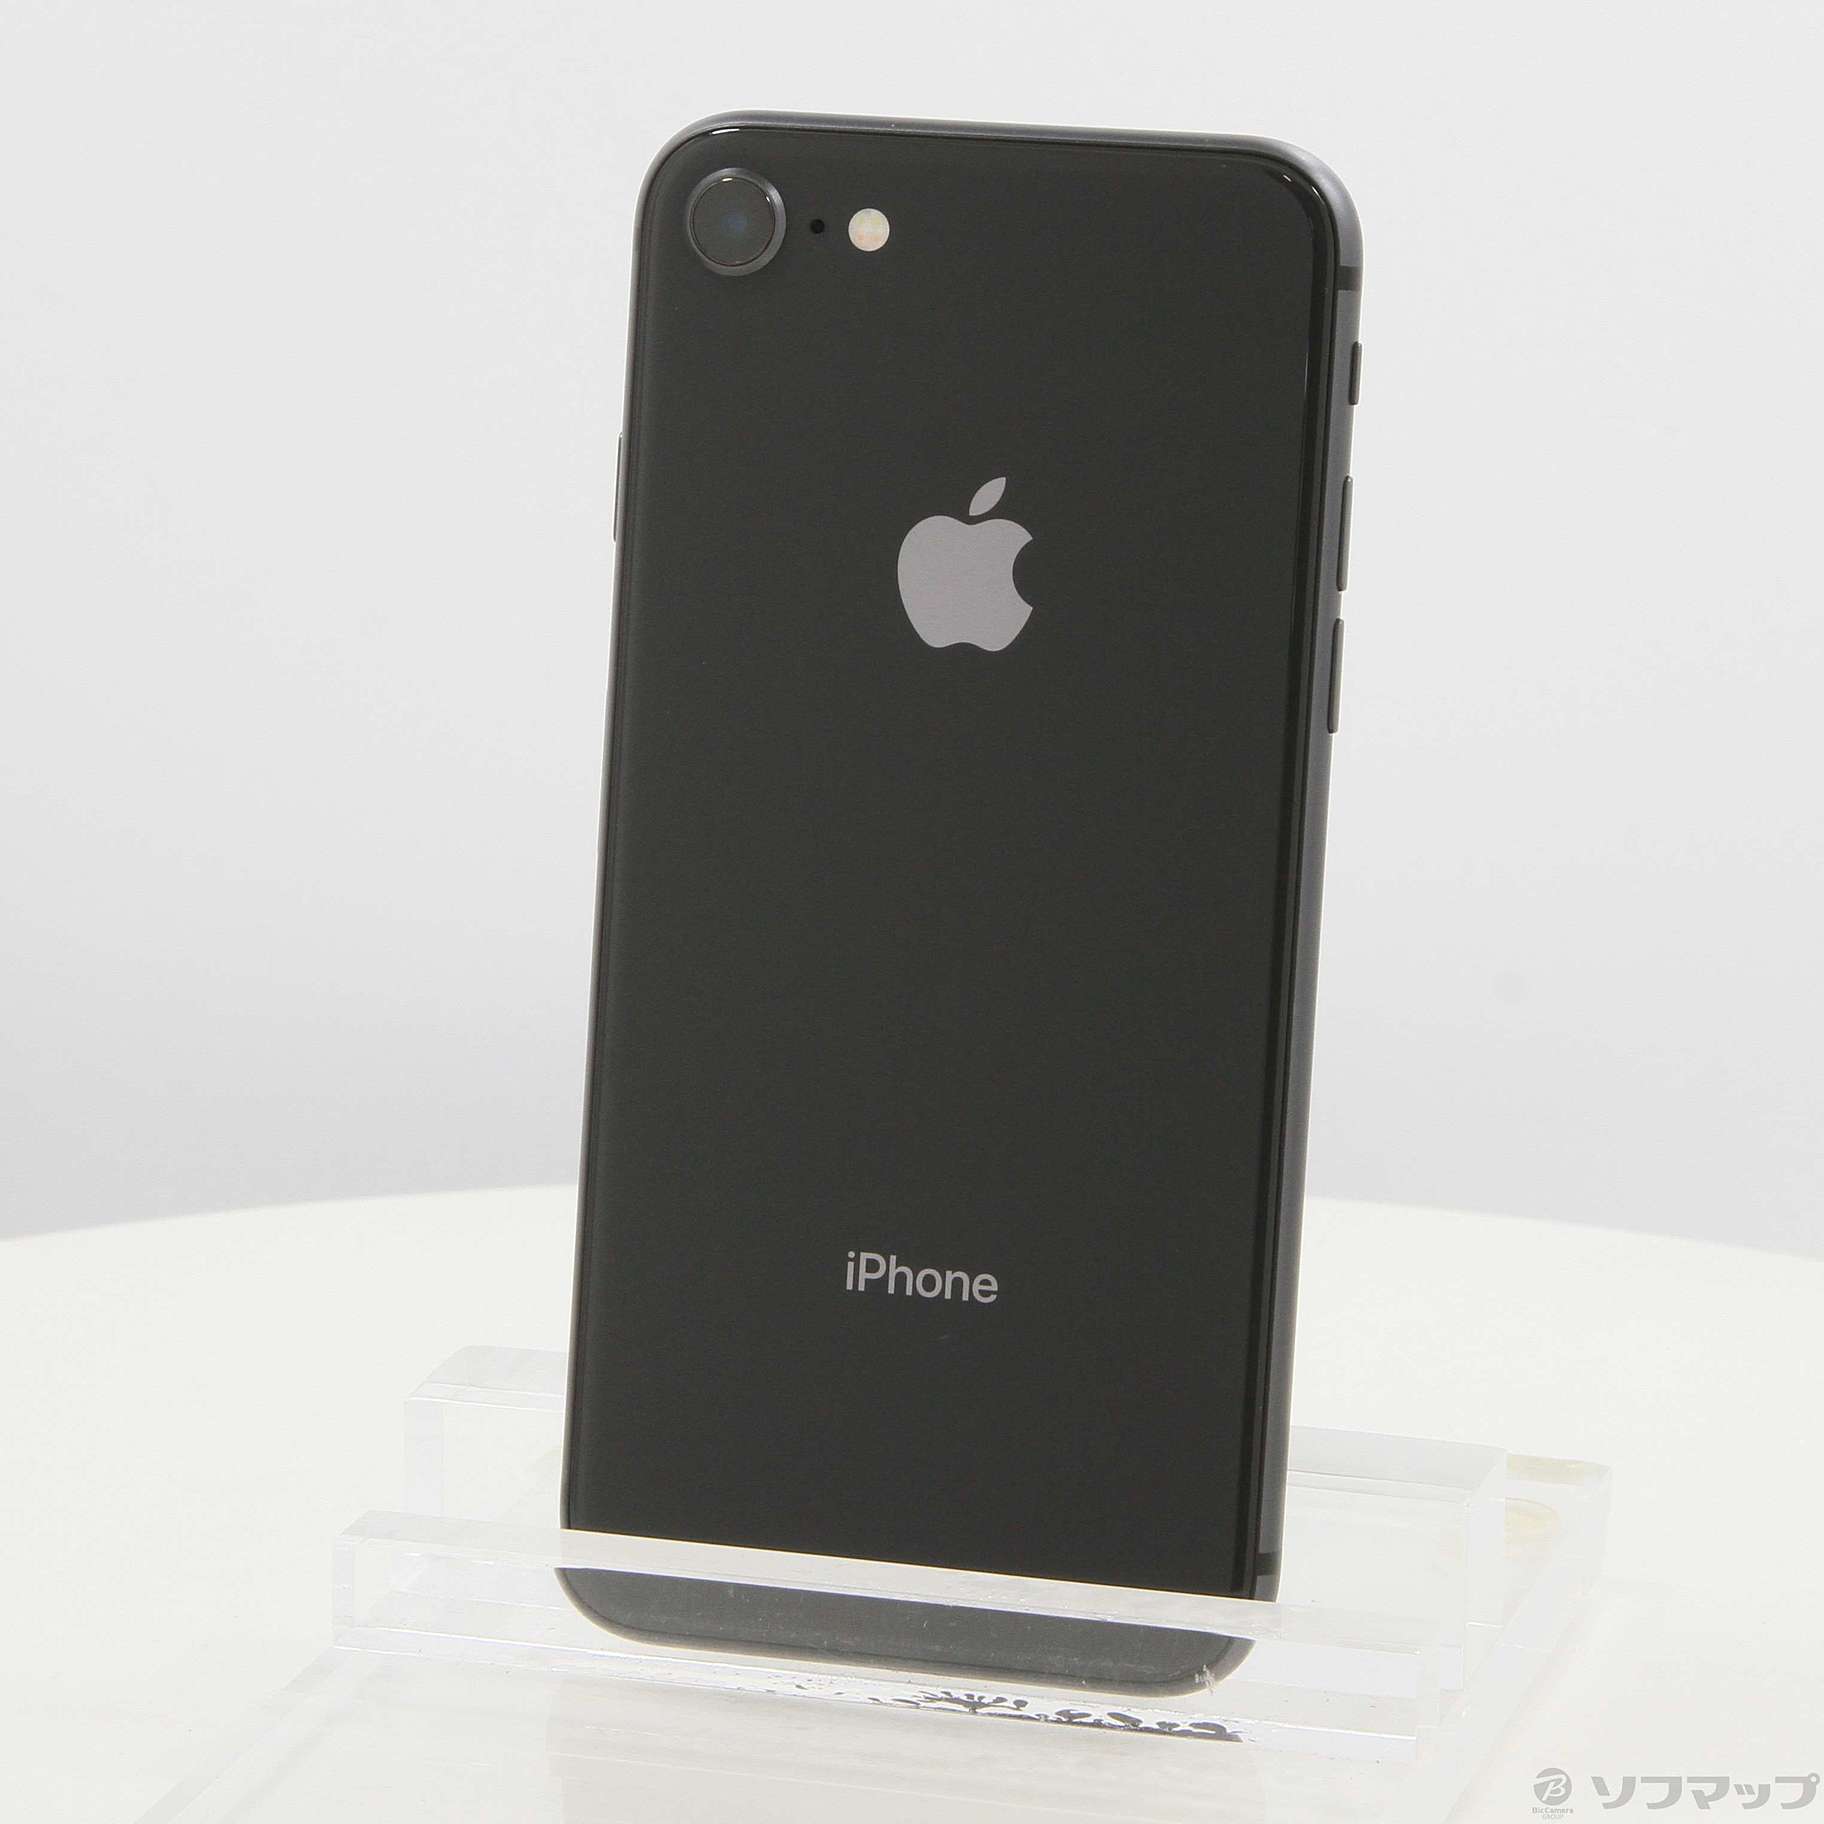 iPhone 8 スペースグレー 64GB sim フリー